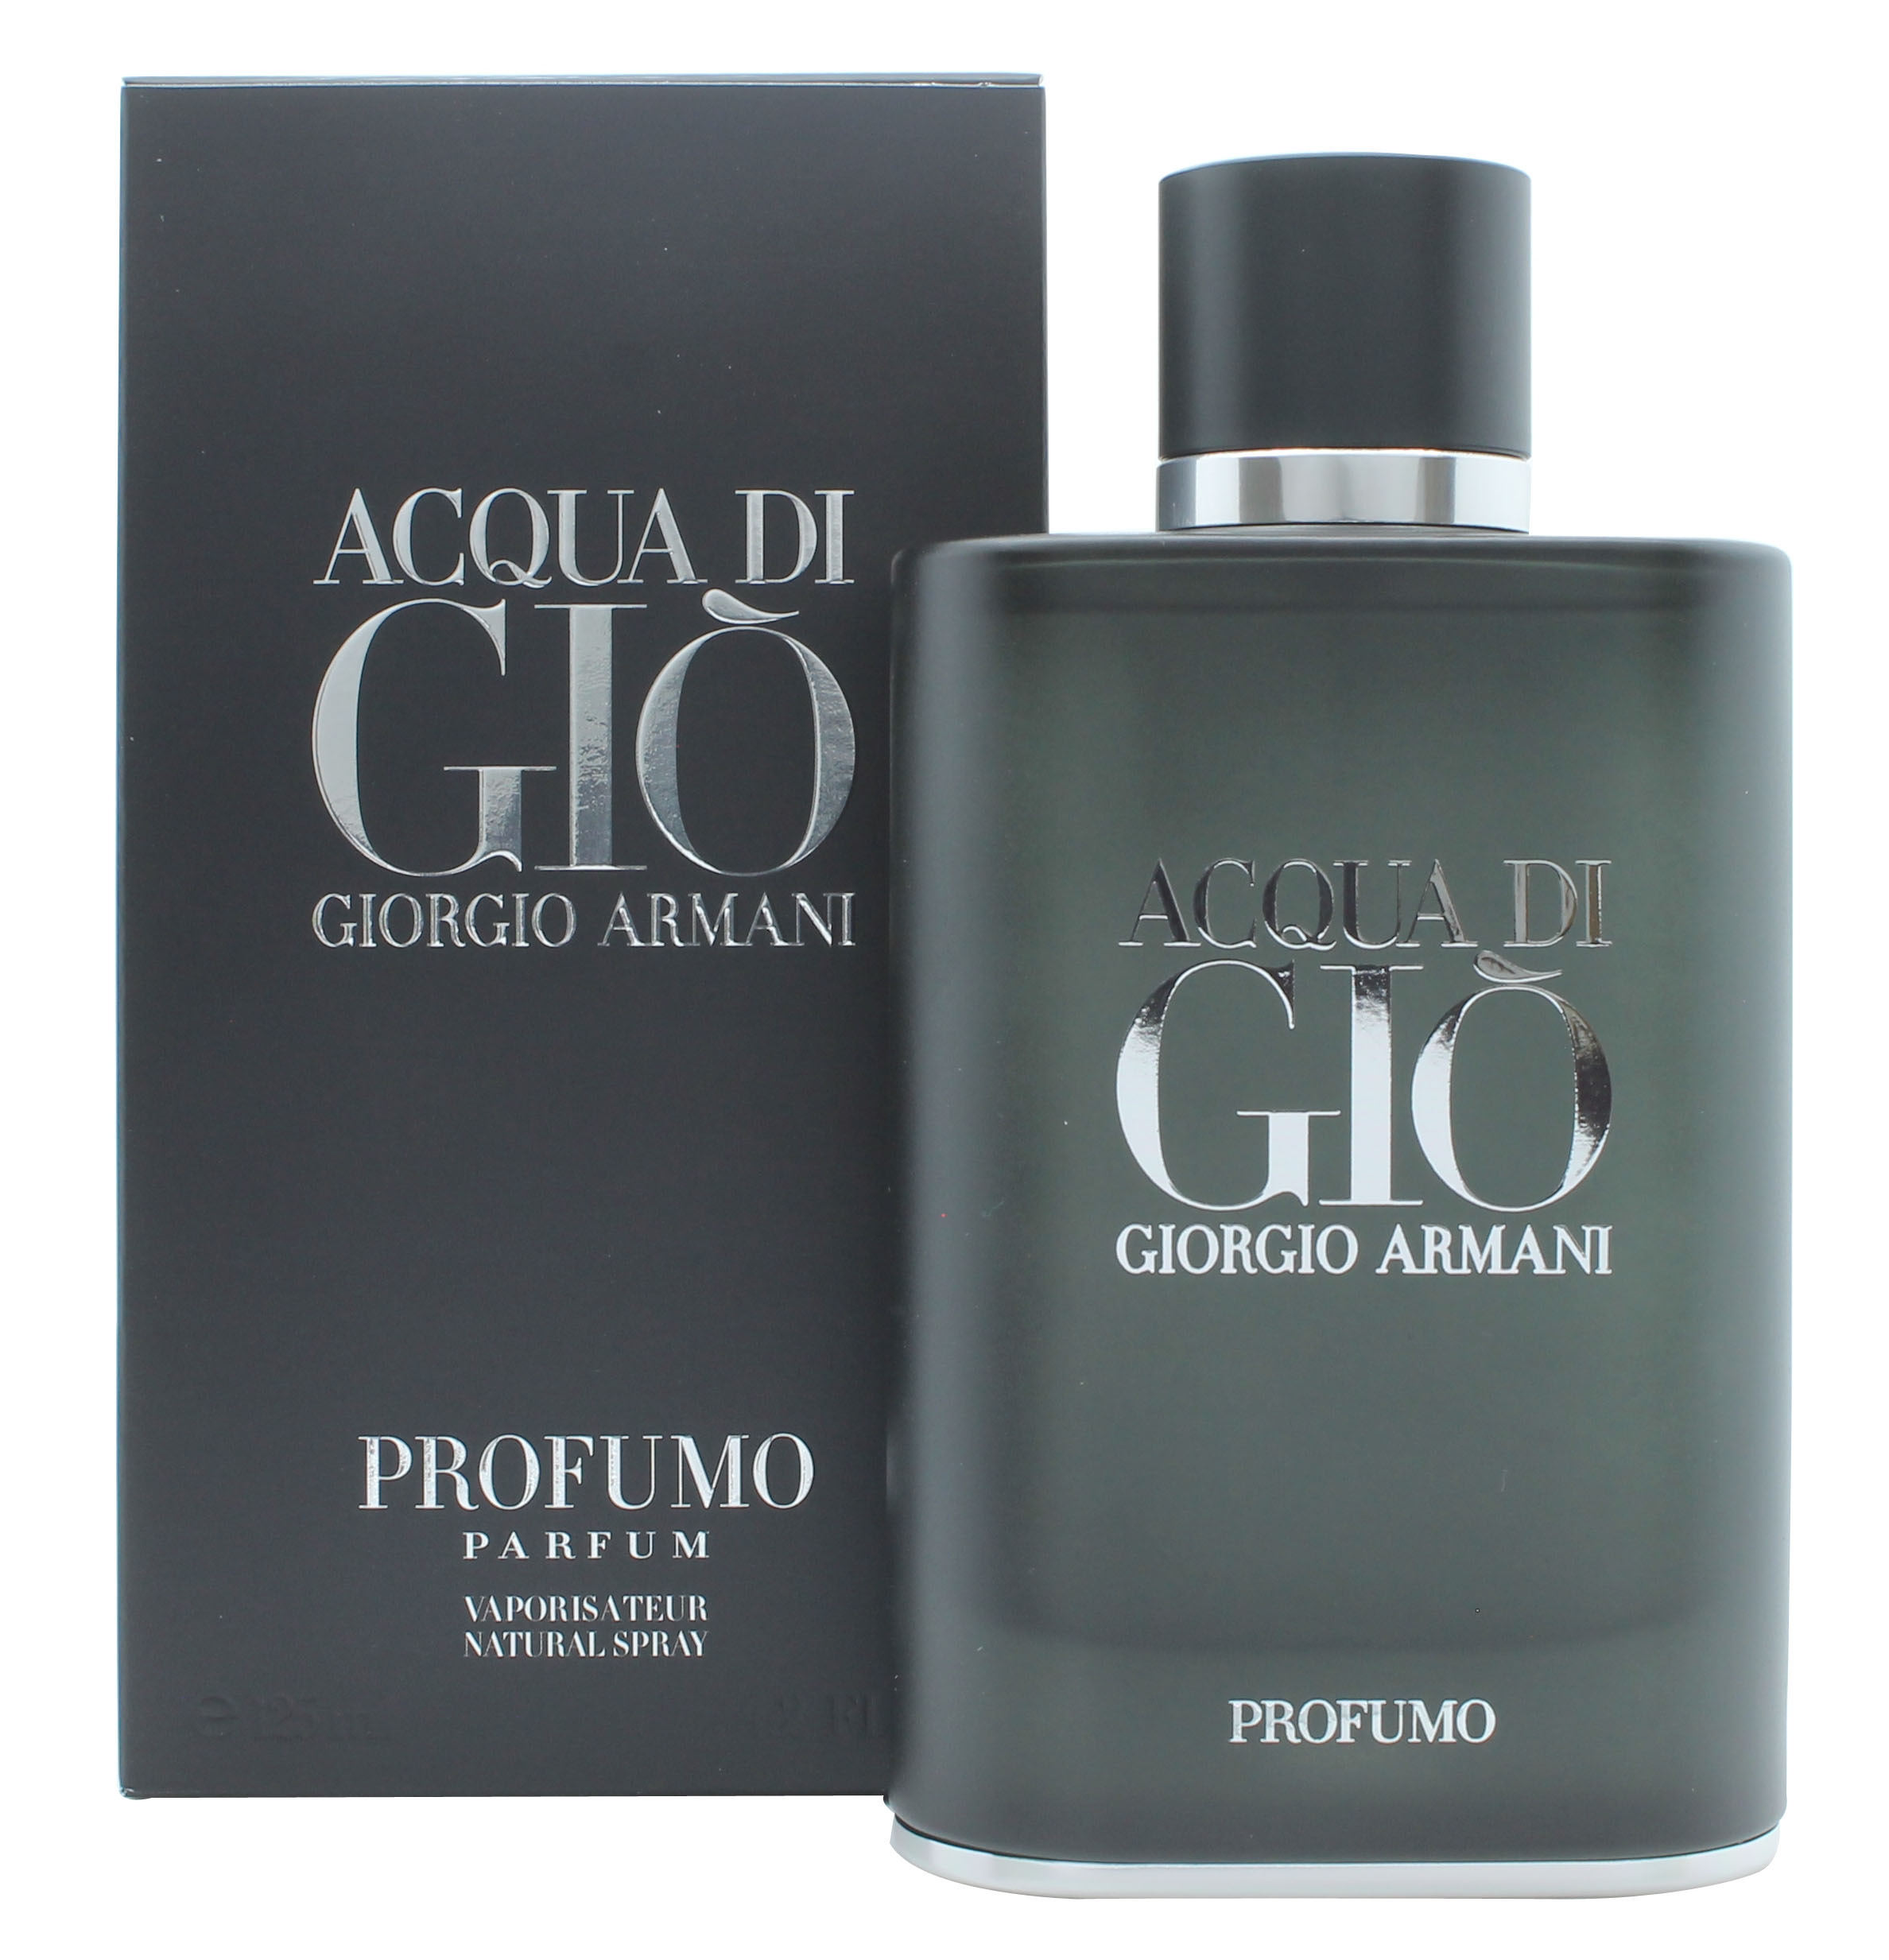 Giorgio Armani Acqua di Gio Profumo Eau de Parfum 125ml Spray | Eclipse ...